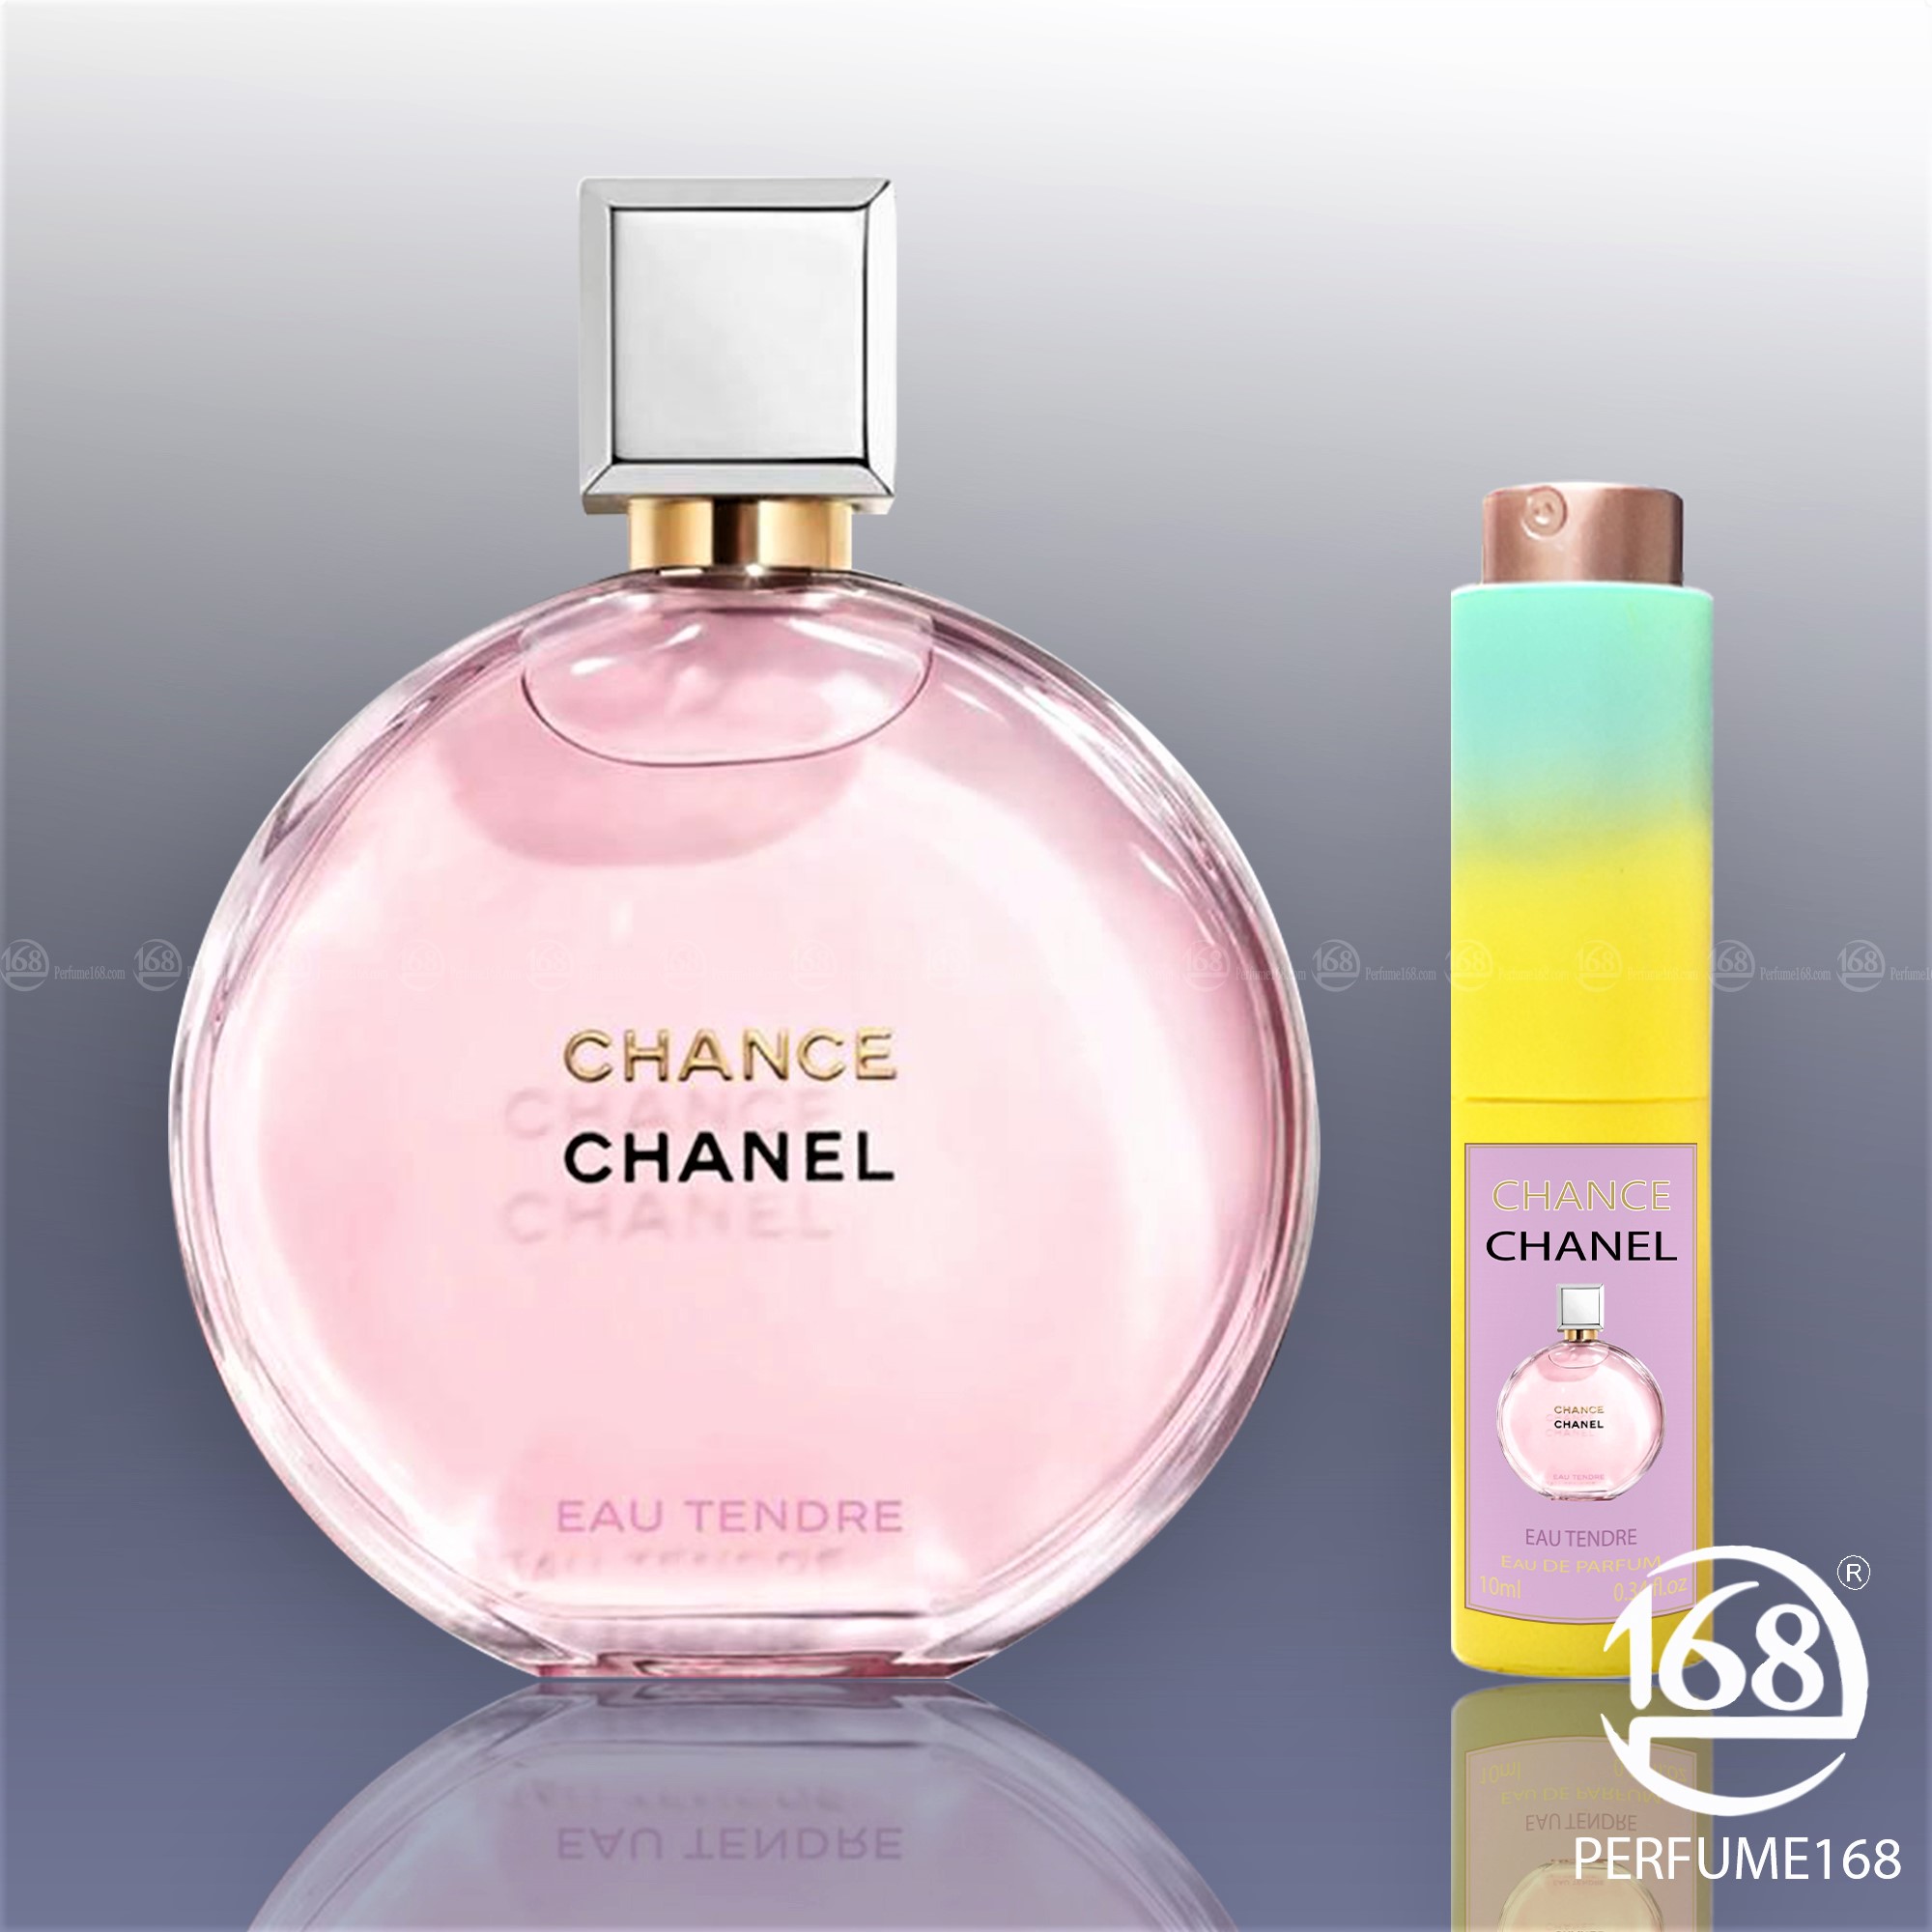 Chance Eau Tendre  Cologne  Fragrance  CHANEL